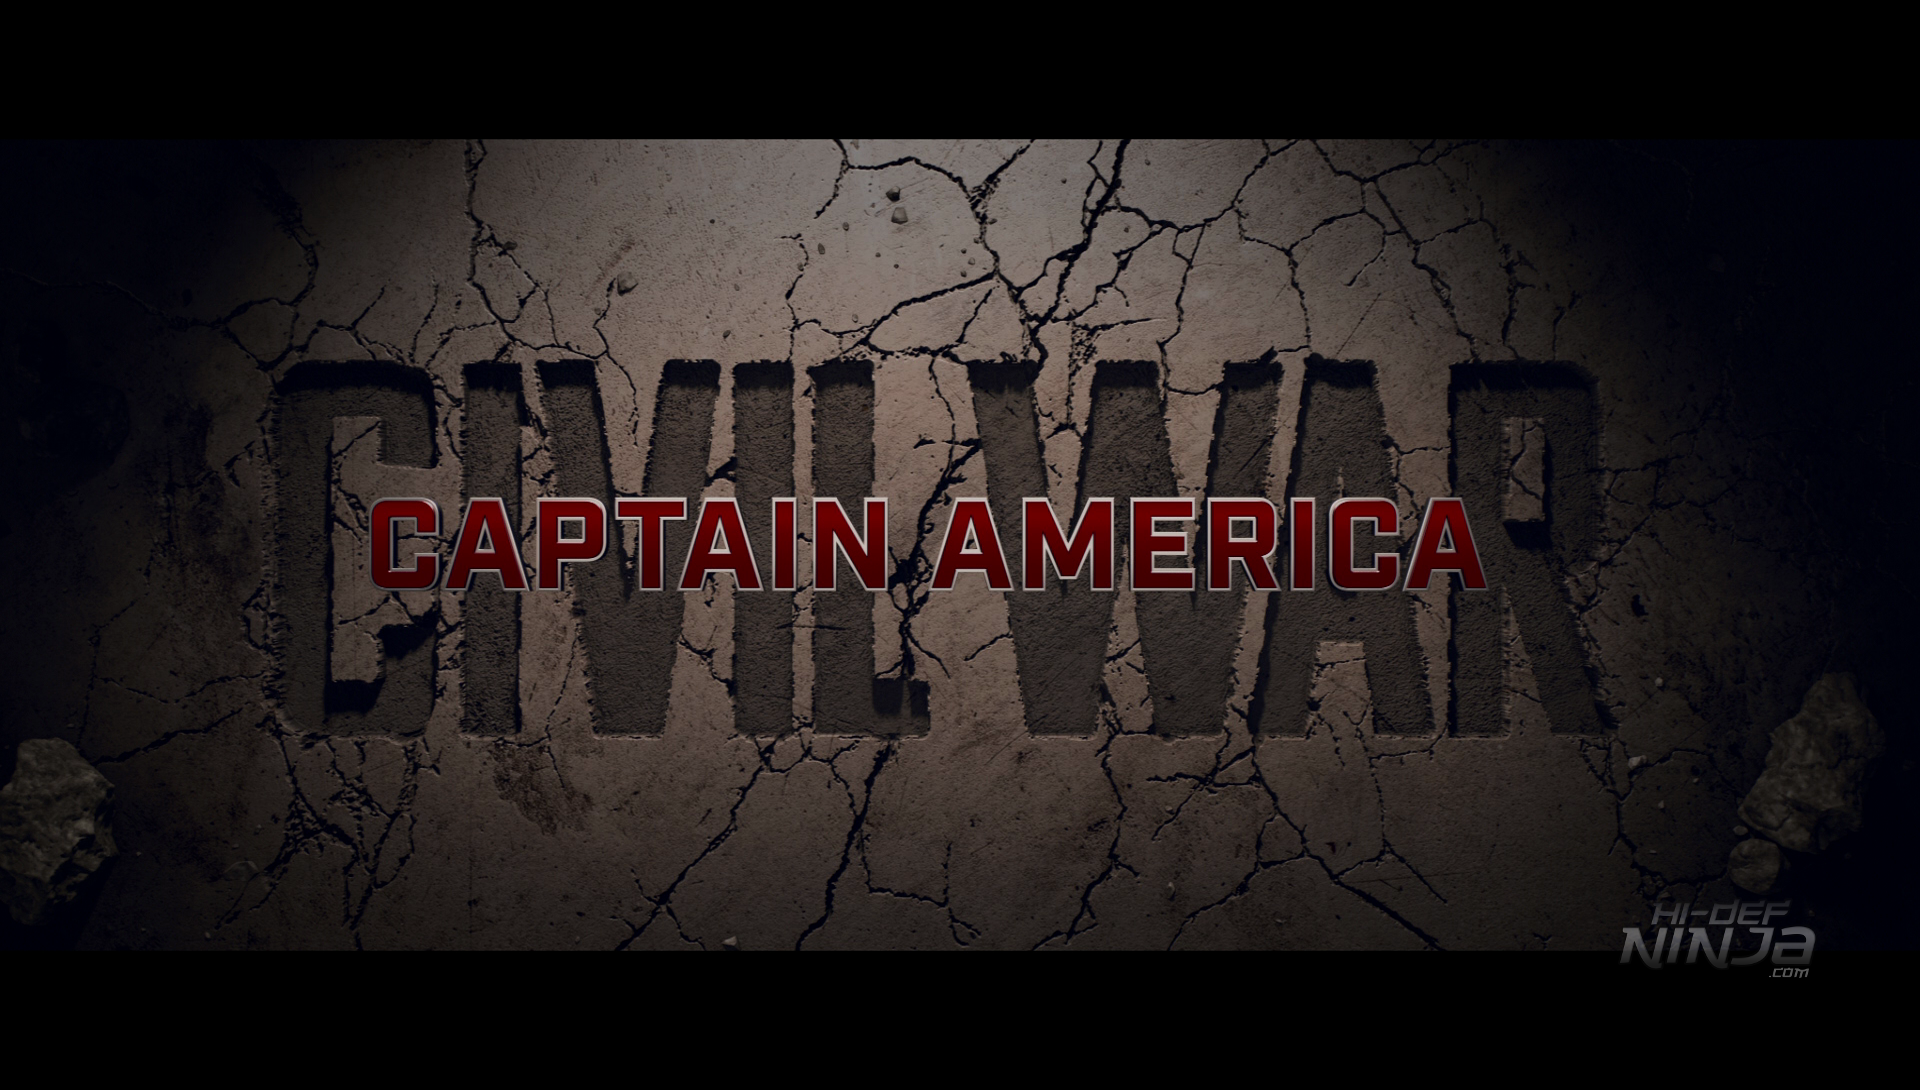 captainamericacivilwar-hidefninja-1